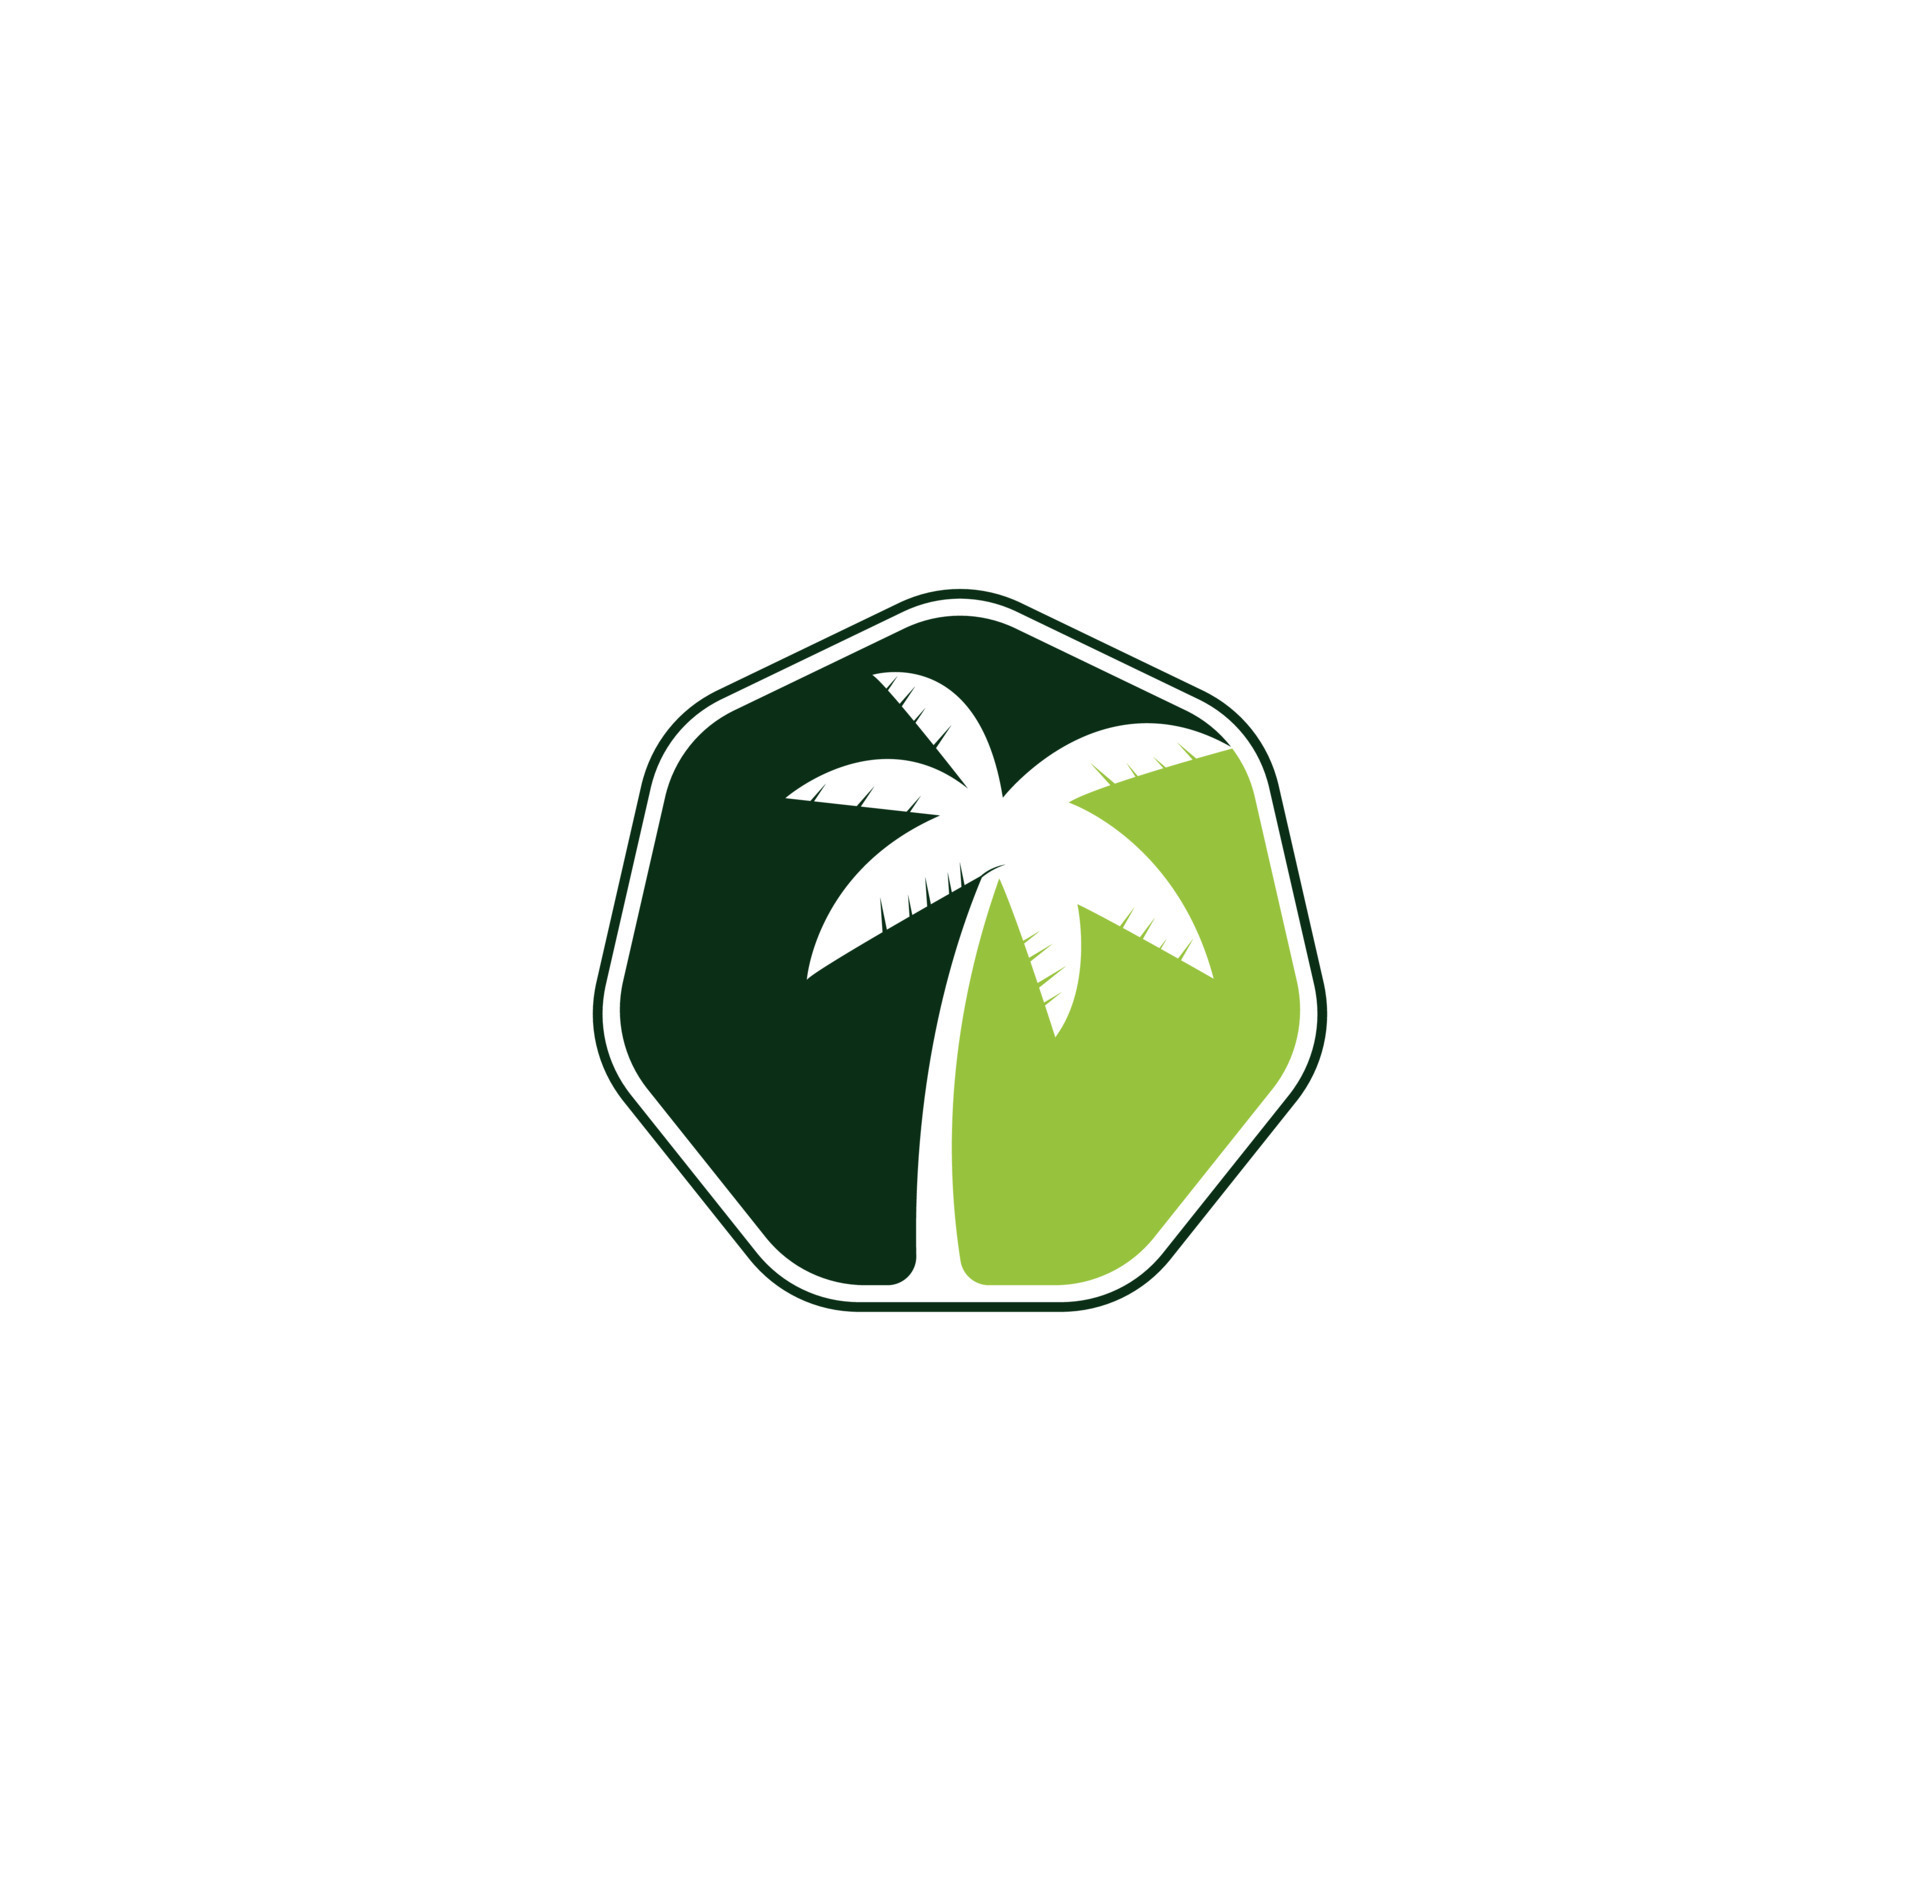 Tropical beach and palm tree logo design. Creative simple palm tree ...